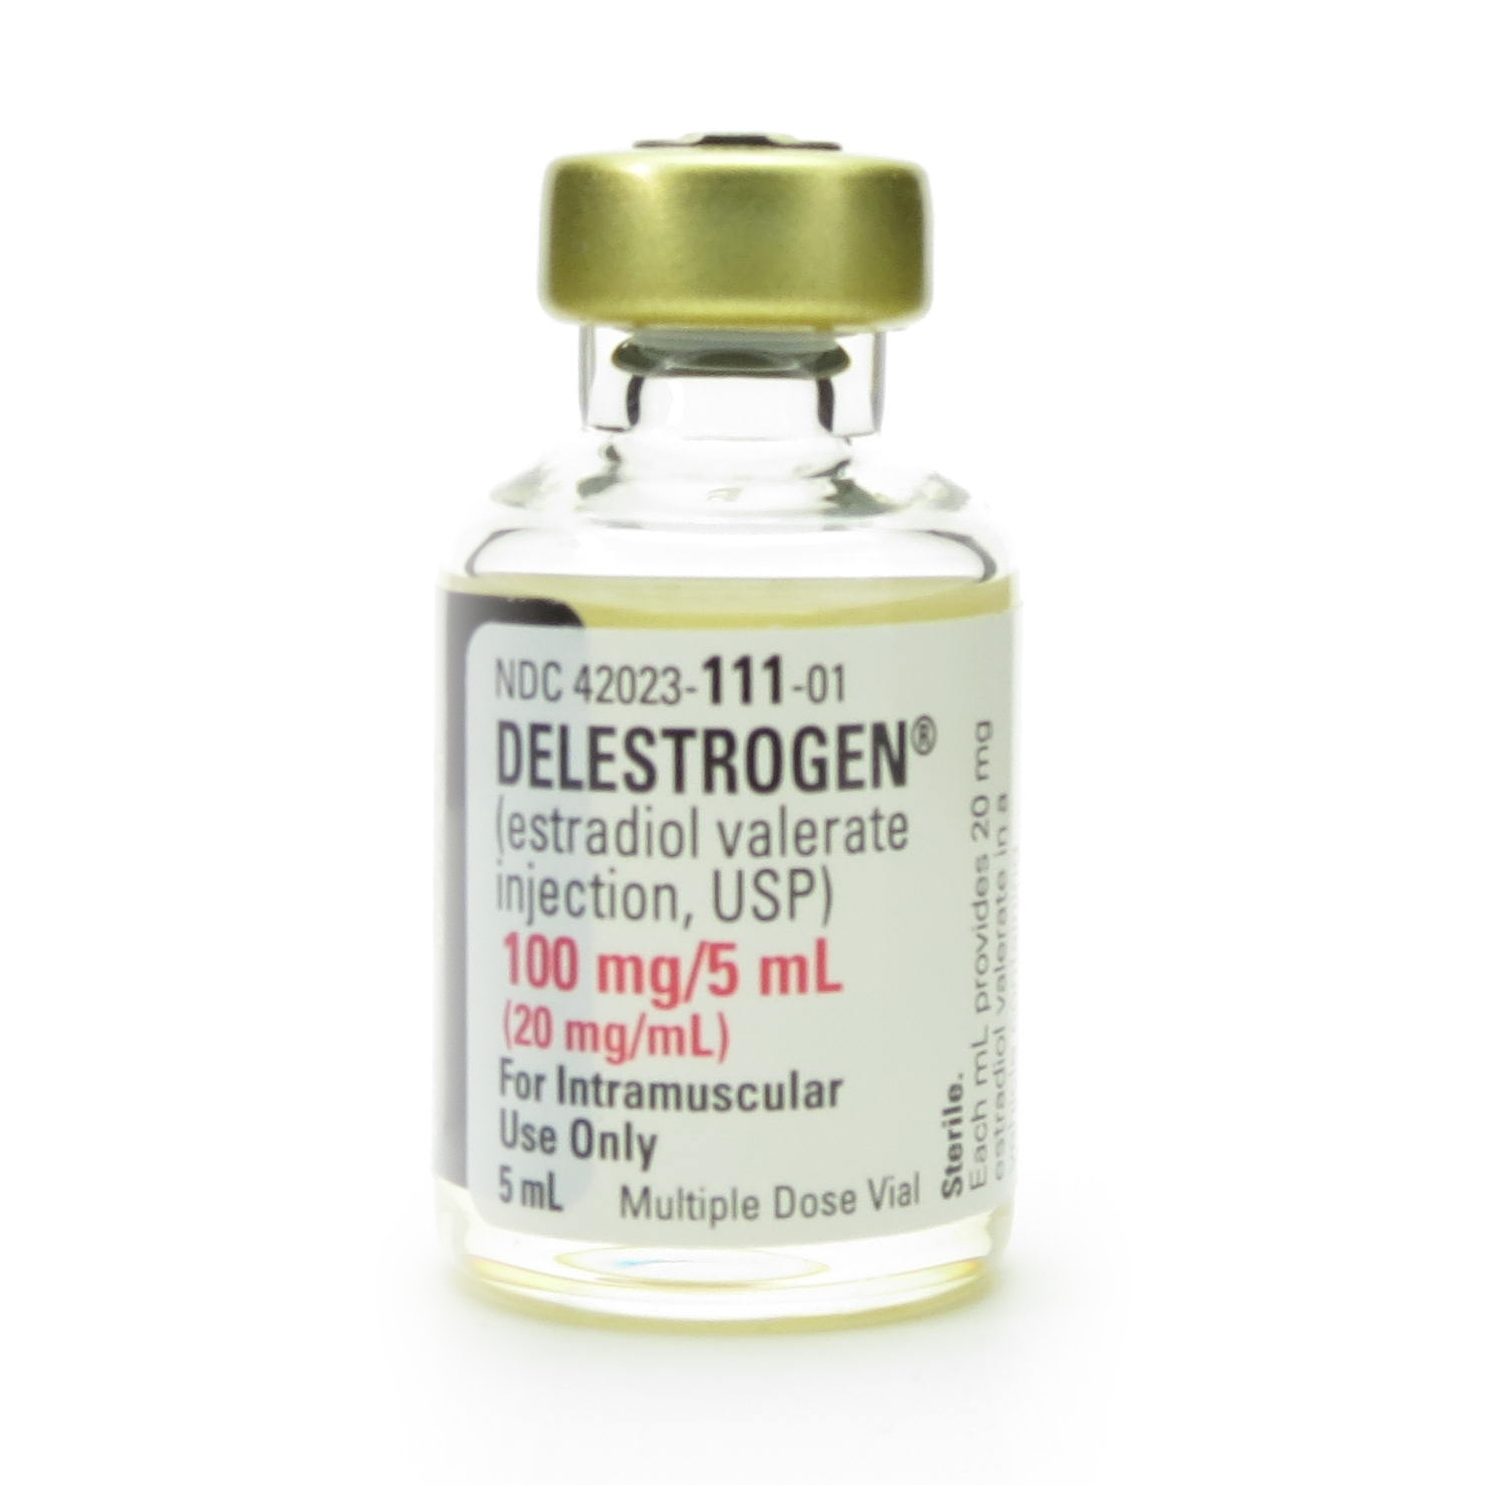 Delestrogen - image 0